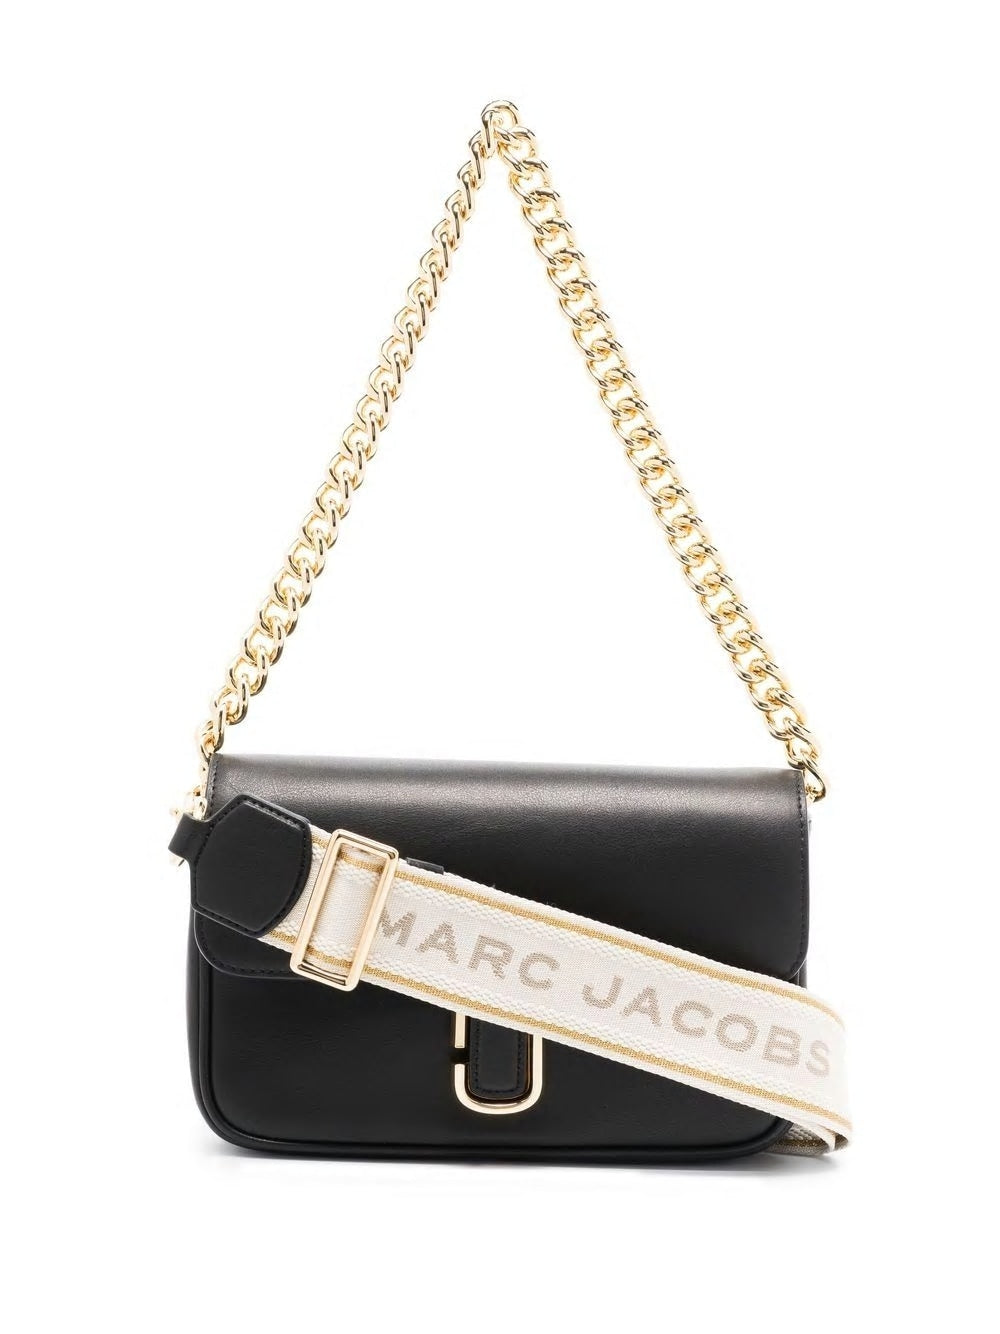 MARC JACOBS Feminine Black Shoulder Handbag for Fashion-Forward Women